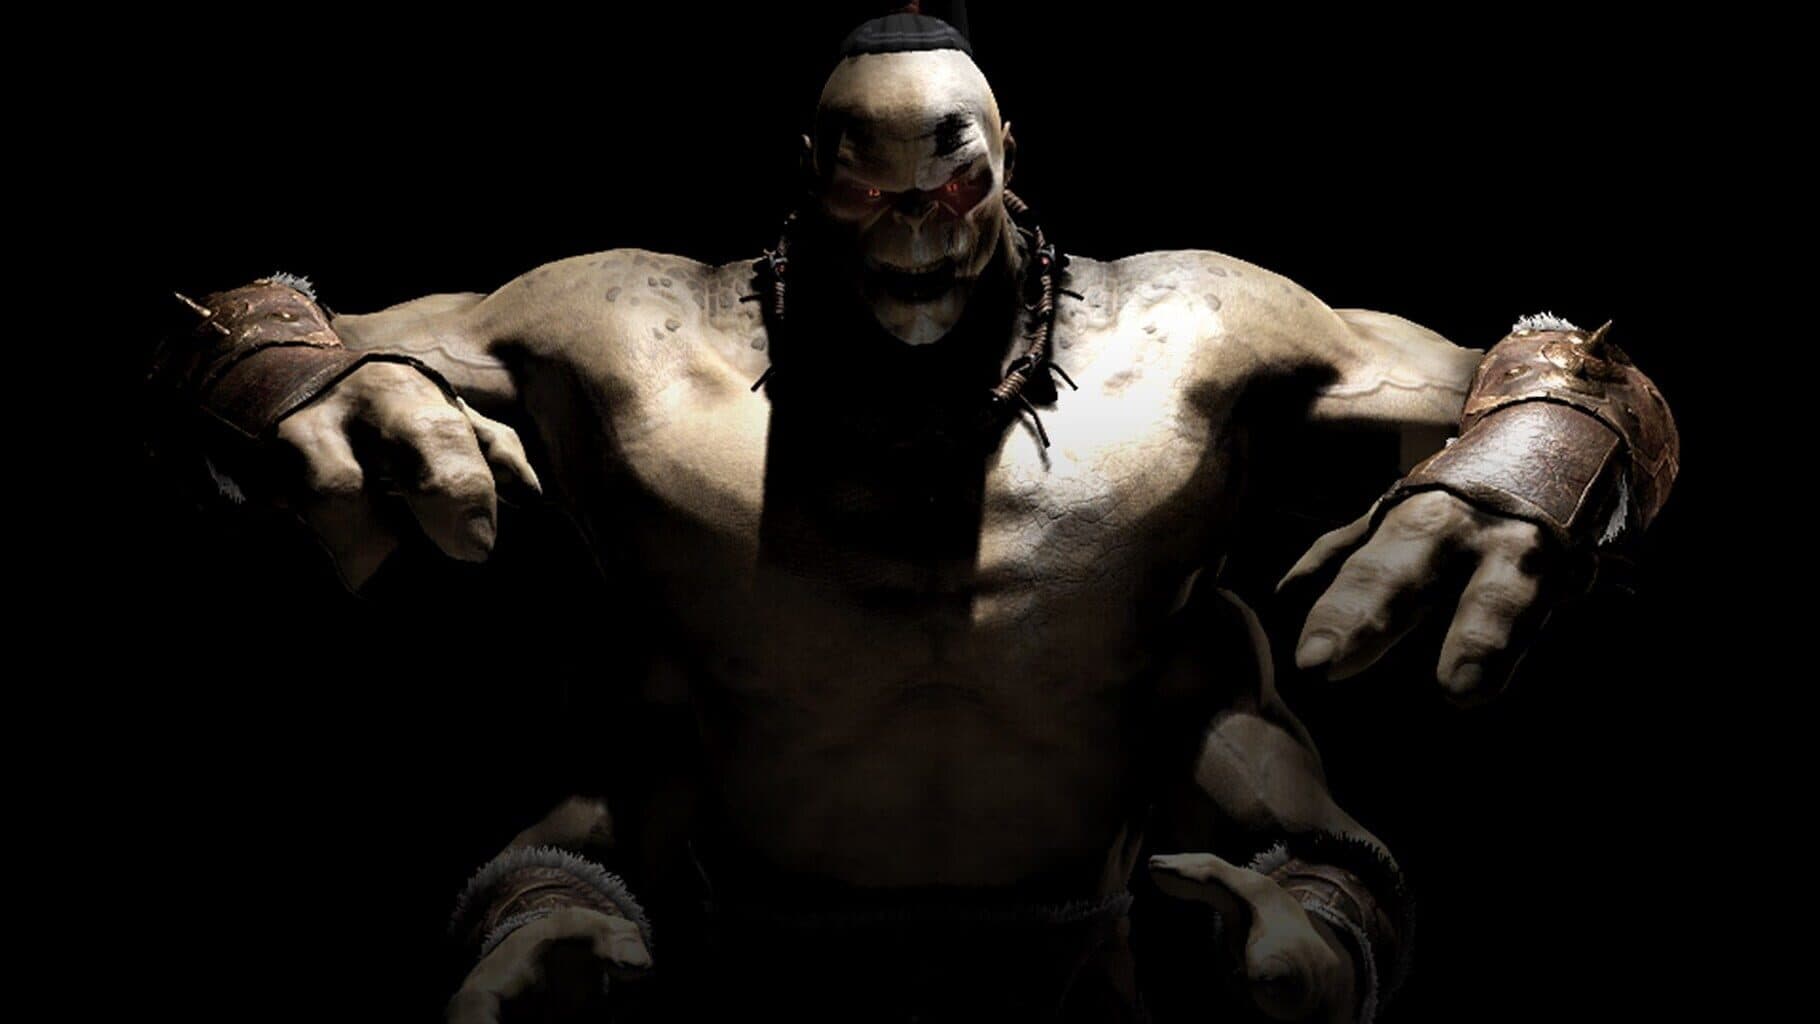 Mortal Kombat X: Goro Image